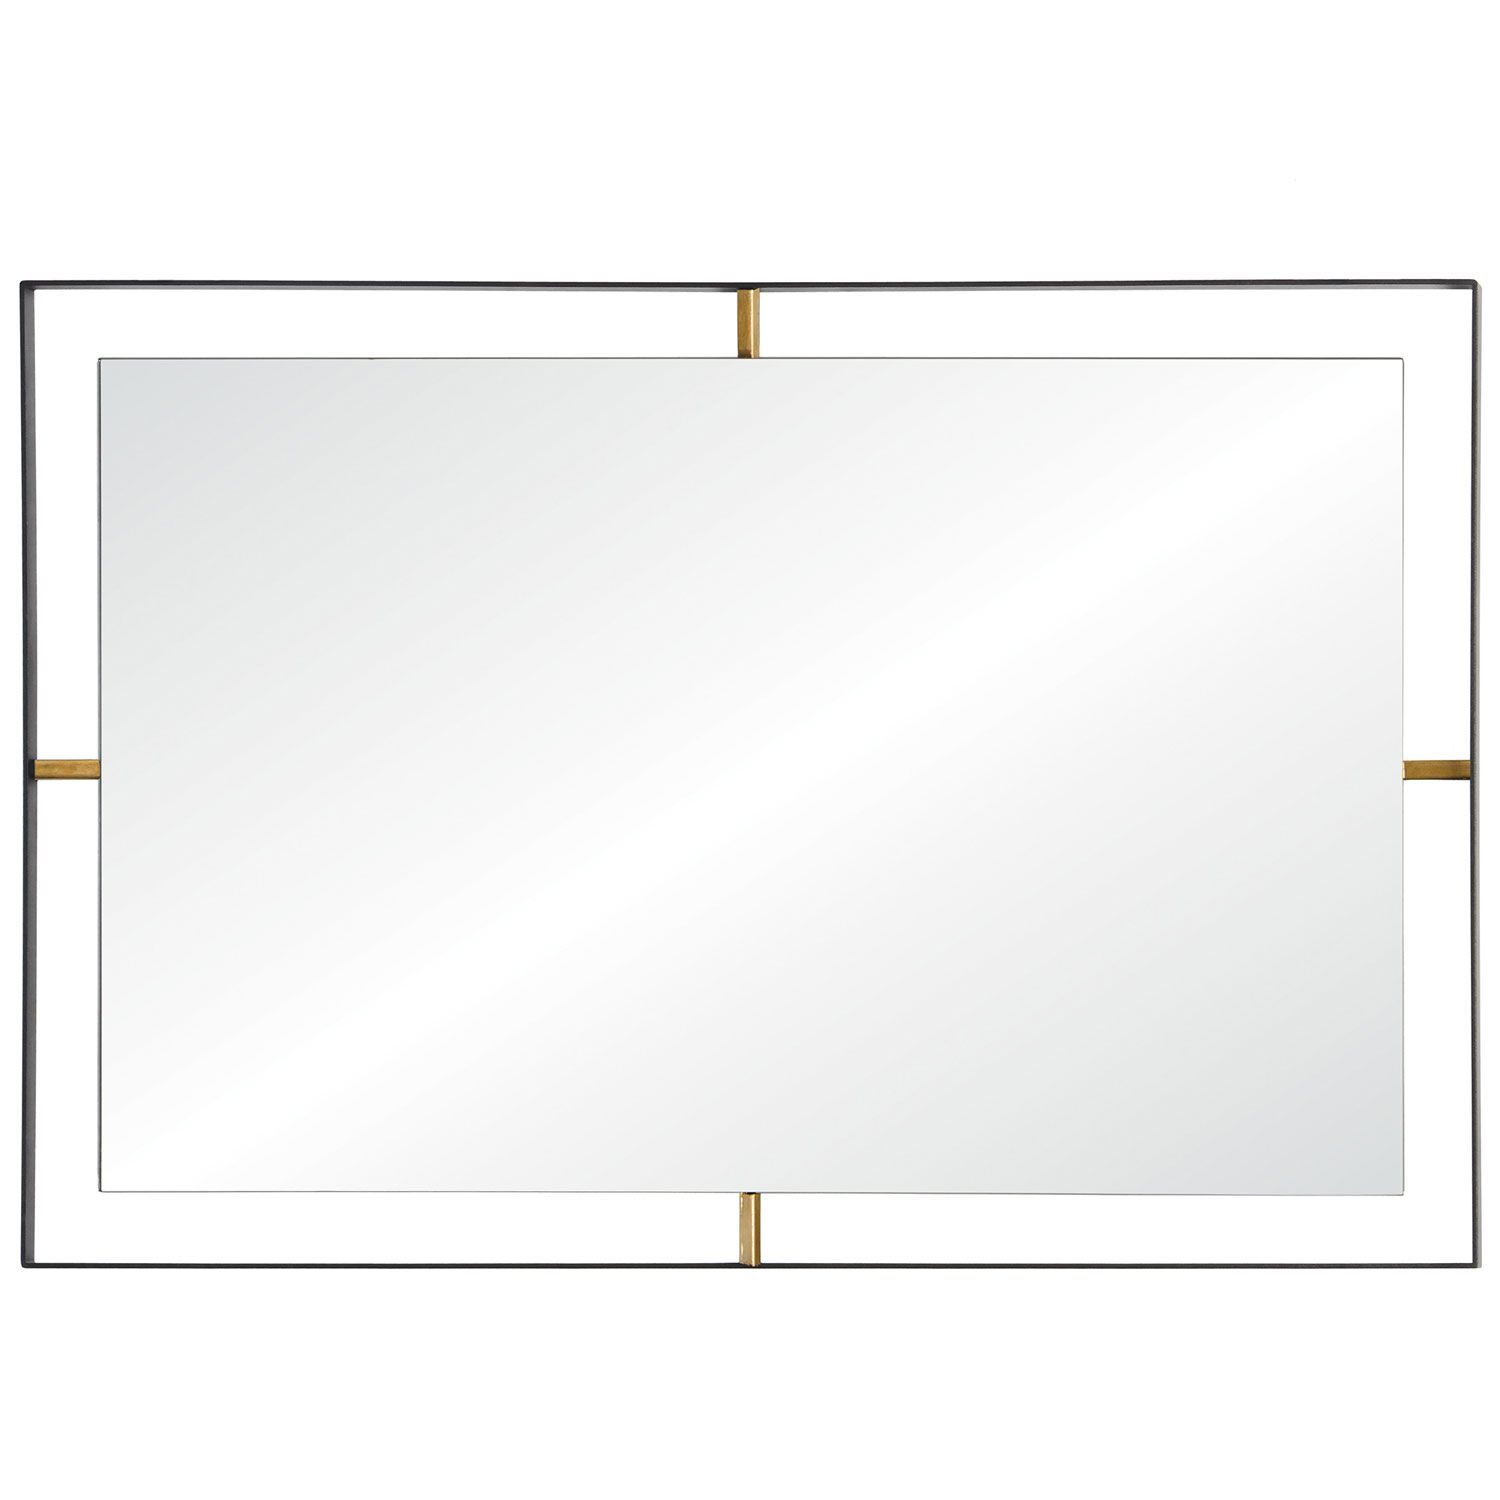 Varaluz Casa Framed Matte Black Rectangle Mirror 610030 | Bellacor Inside Matte Black Square Wall Mirrors (View 2 of 15)